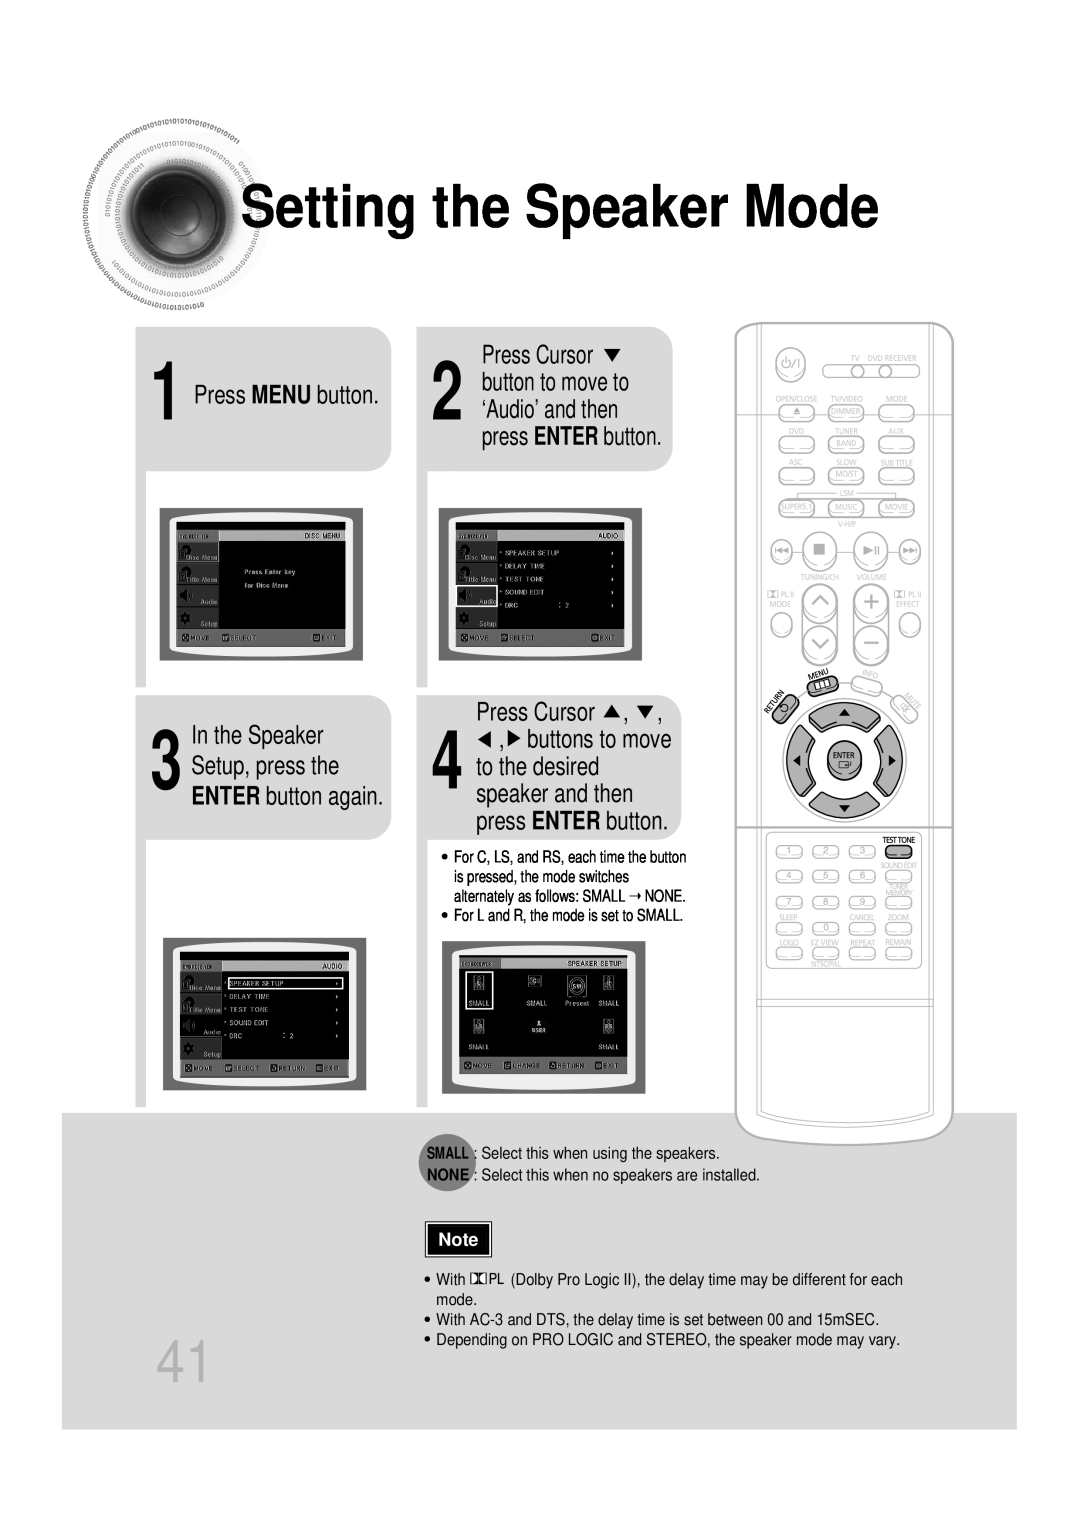 Samsung HT-DB350, HT-DB1650 Settingthe Speaker Mode, In the Speaker, press ENTER button Press Cursor, Press MENU button 